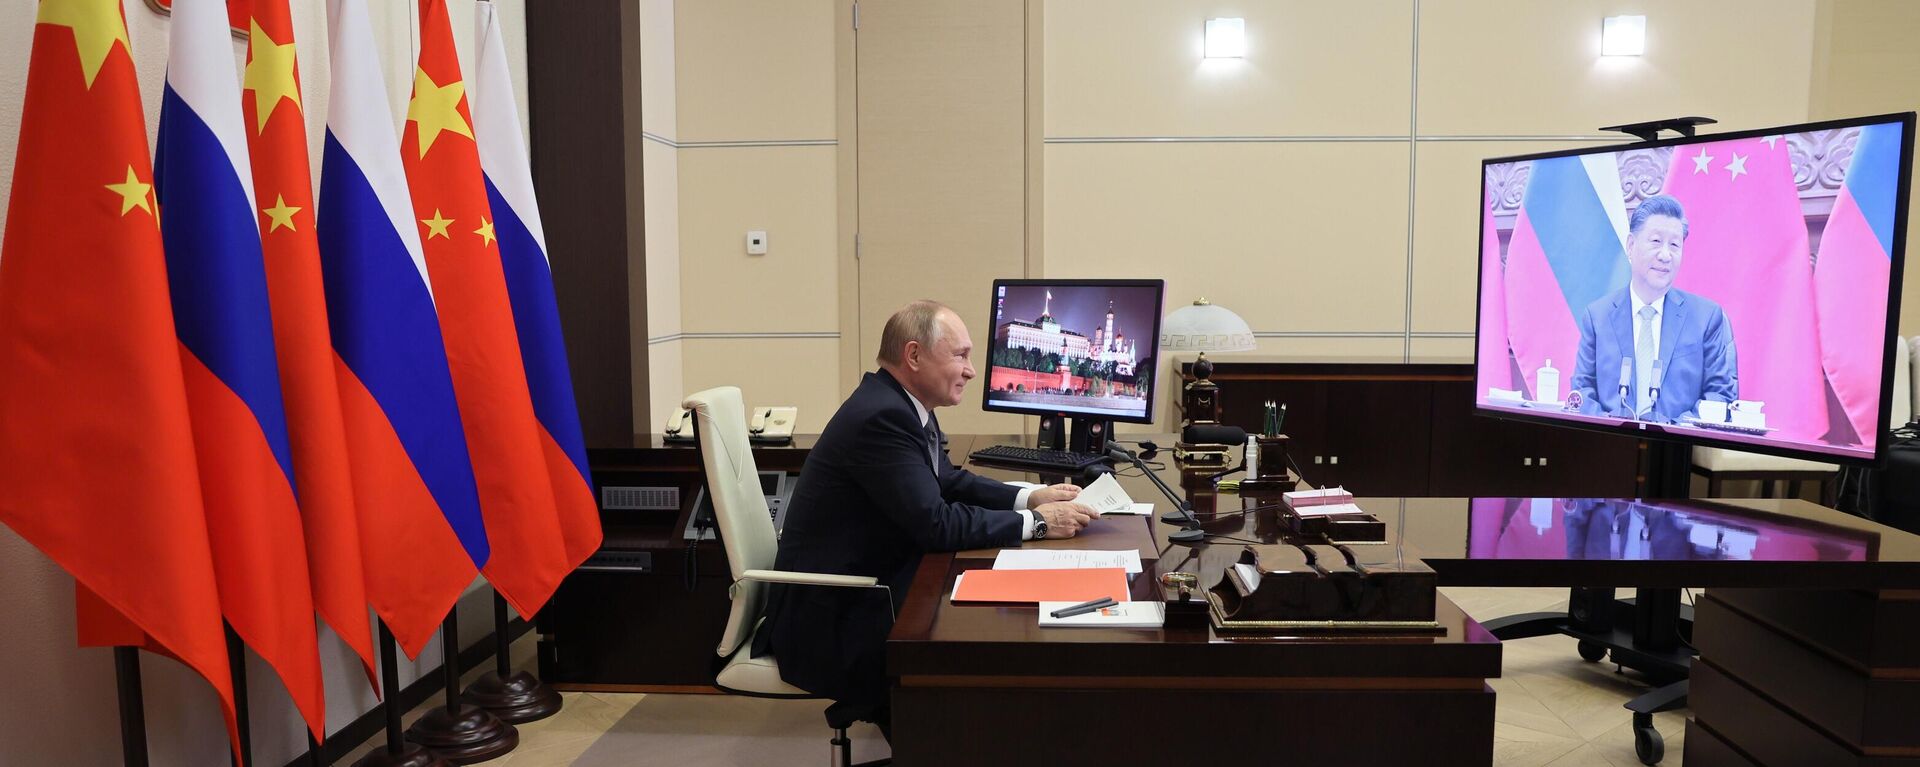 Переговоры президента РФ В. Путина с председателем КНР Си Цзиньпином - Sputnik Молдова, 1920, 15.12.2021